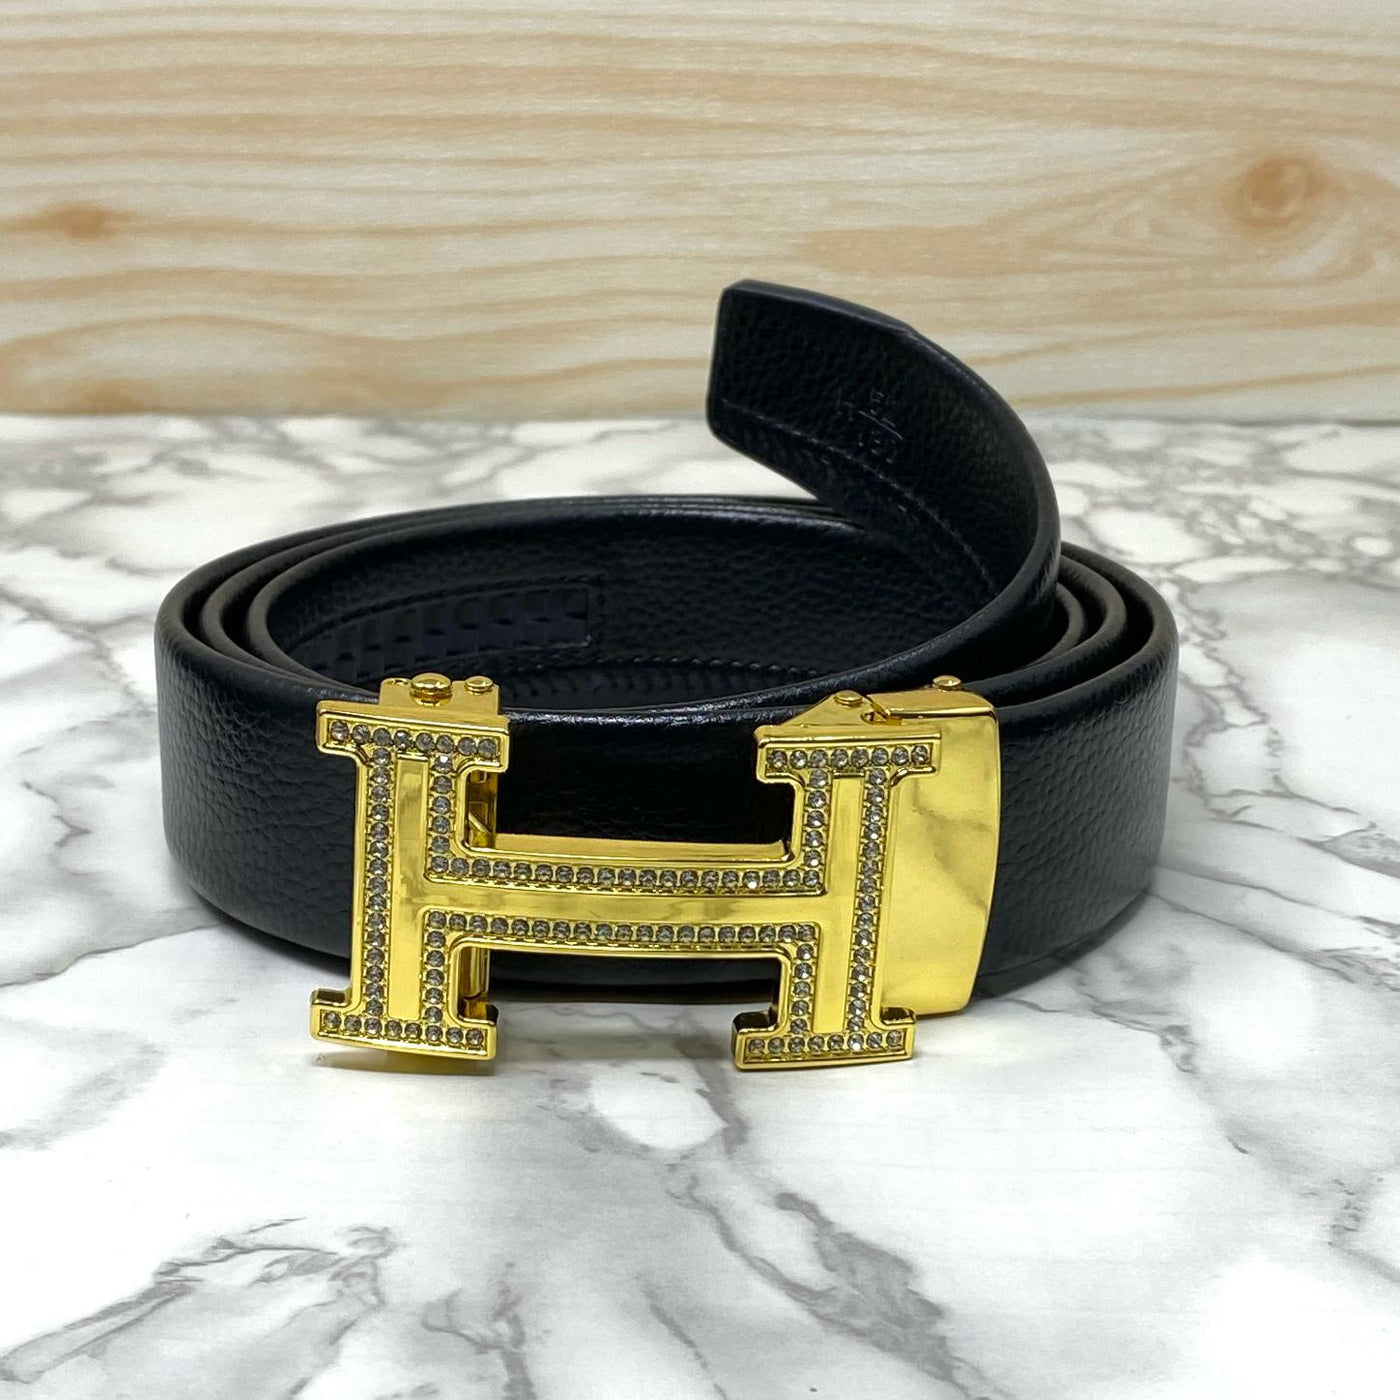 H Shape Adjustable Auto Lock Belt With Diamond Finishing-UniqueandClassy